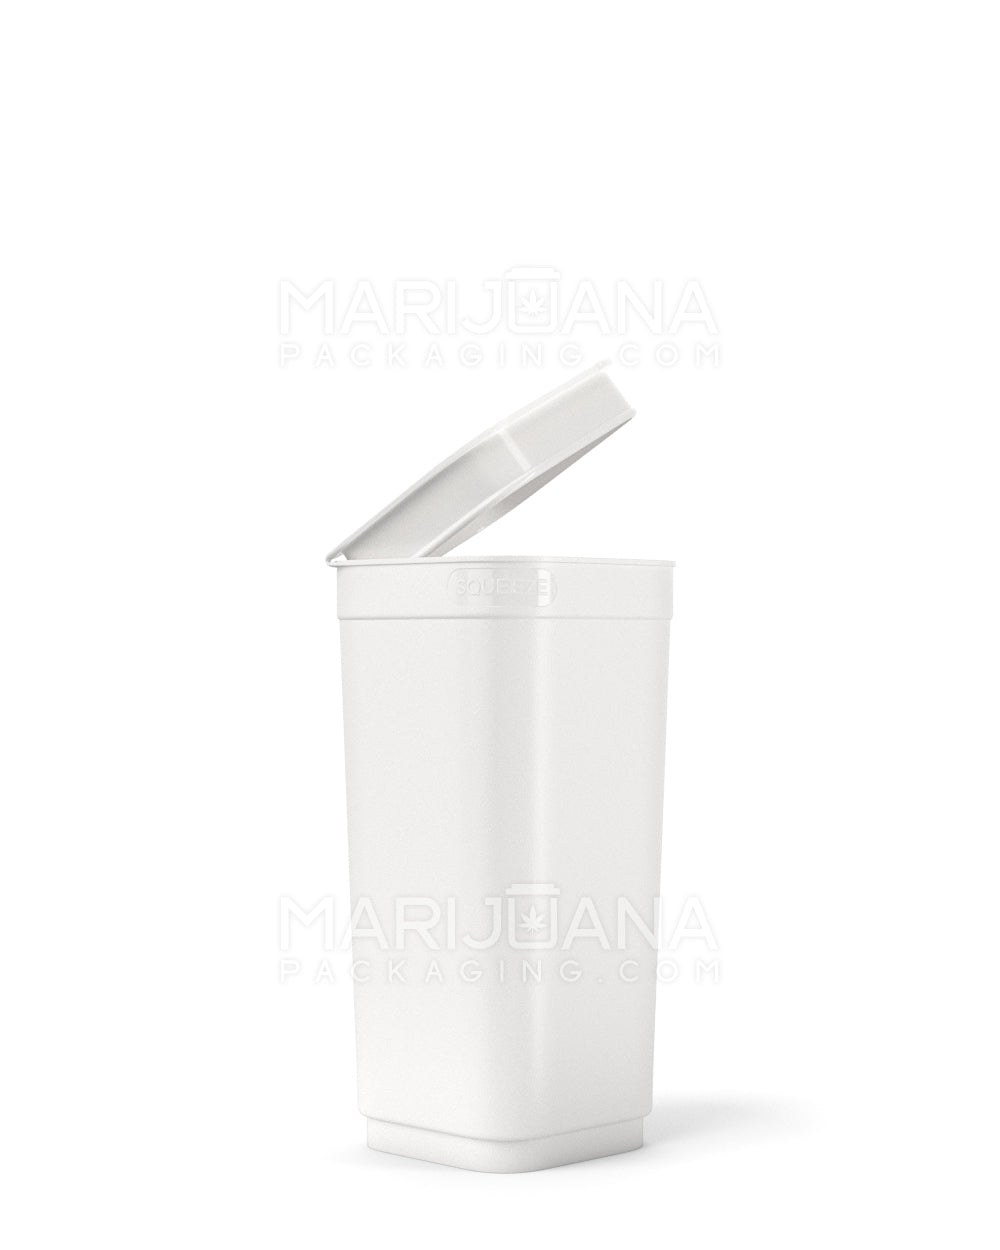 POLLEN GEAR 100% Recyclable Opaque White Pop Box Pop Top Bottles | 30dr - 7g | Sample